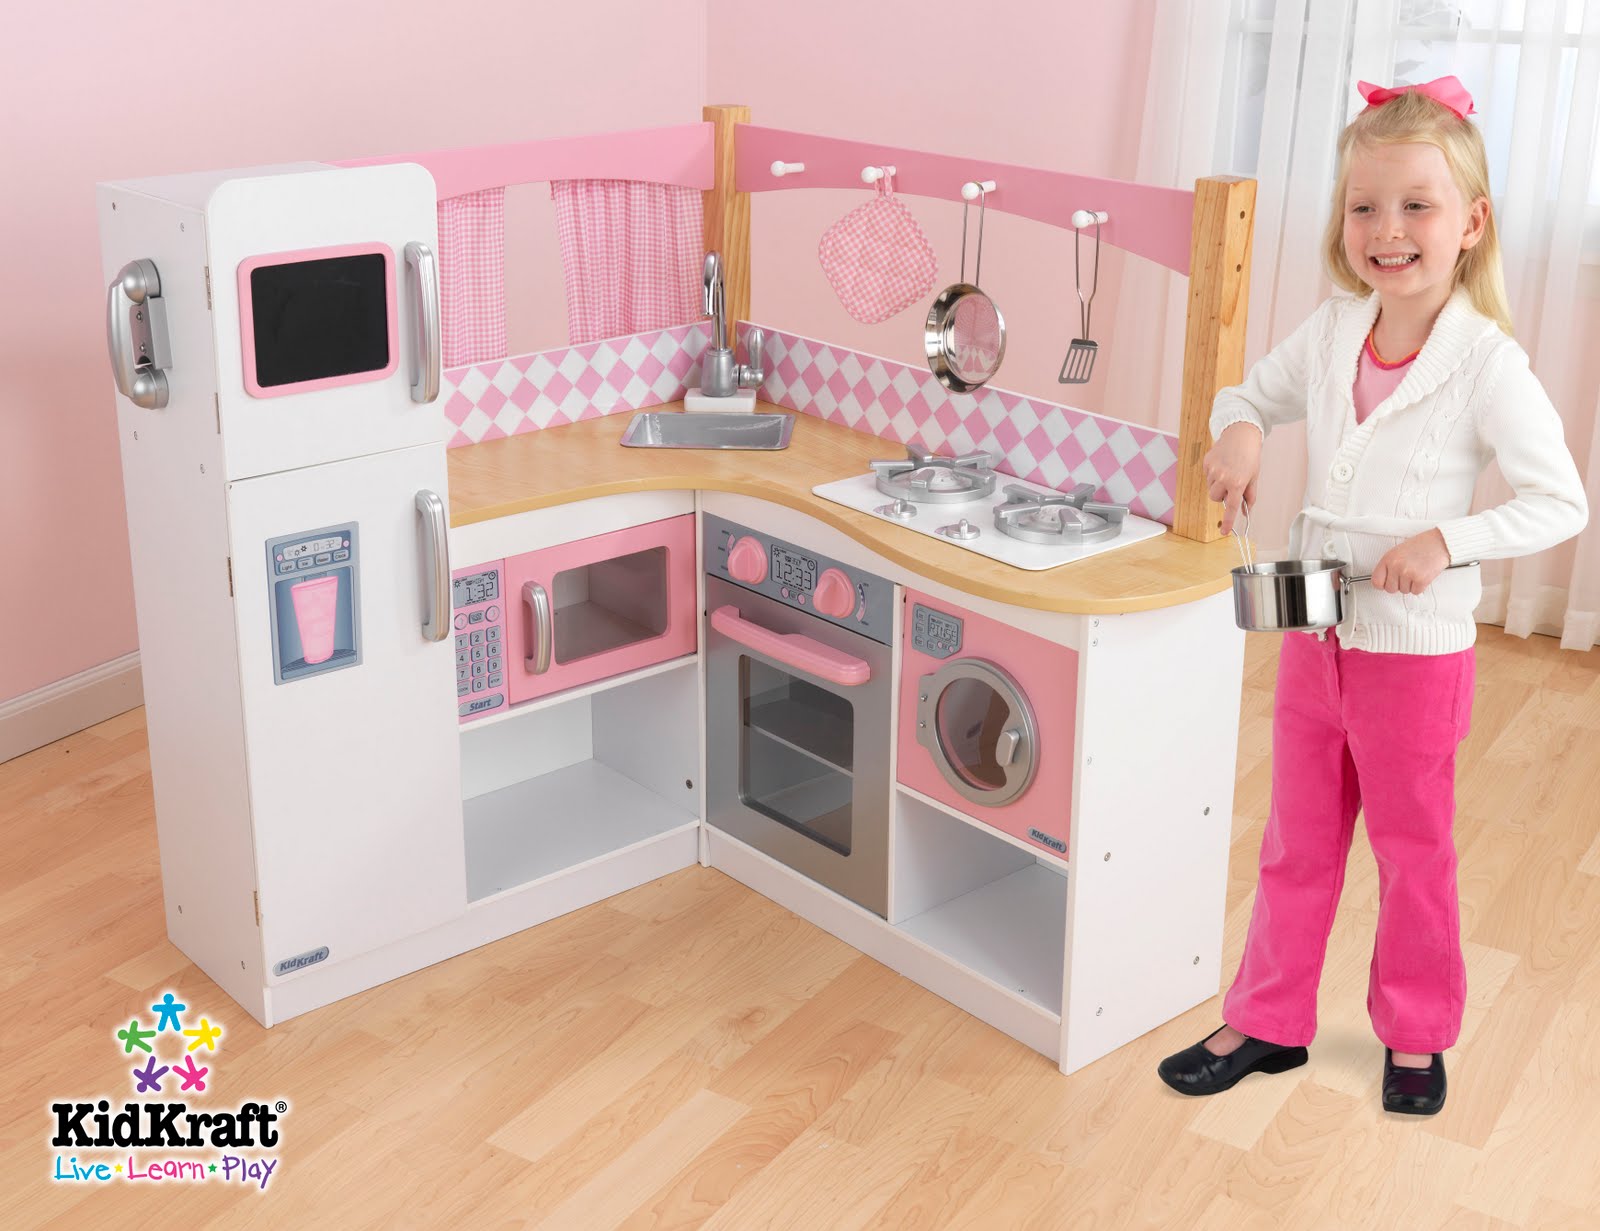 Children's Wooden Toys Toy Play Kitchen Furniture Dollhouse KidKraft Teamson Guidecraft Reviews